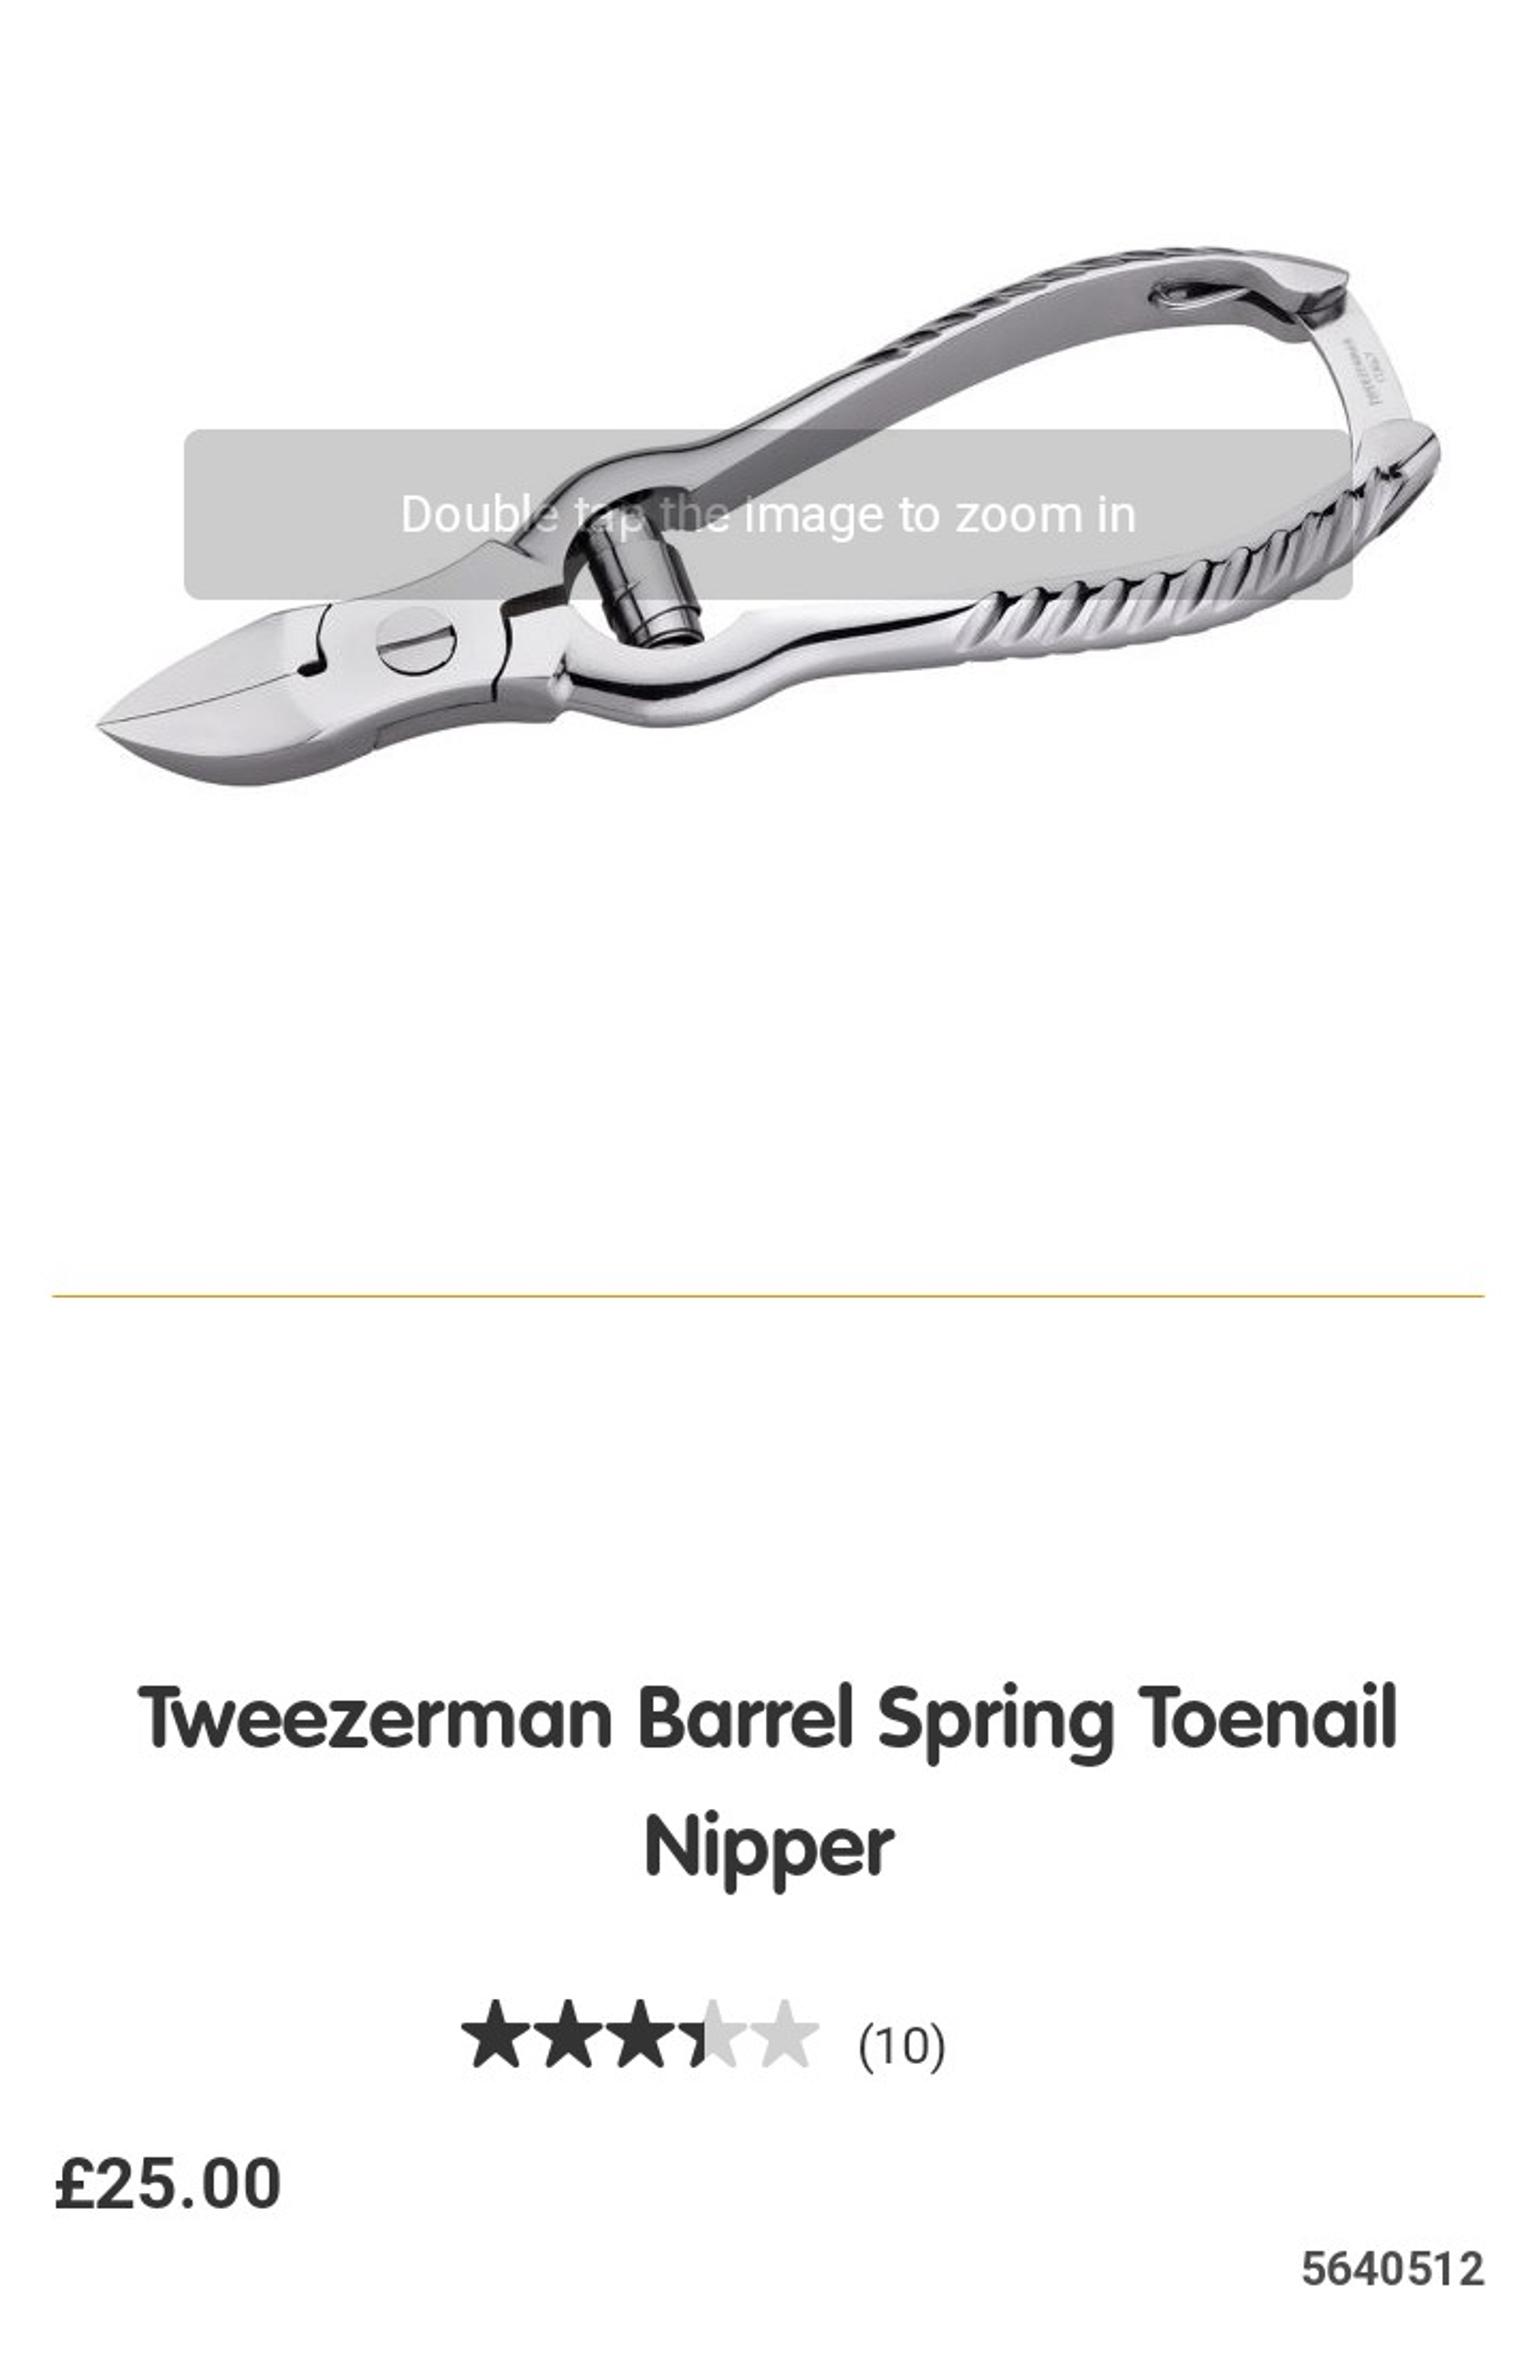 tweezerman barrel spring toenail nipper